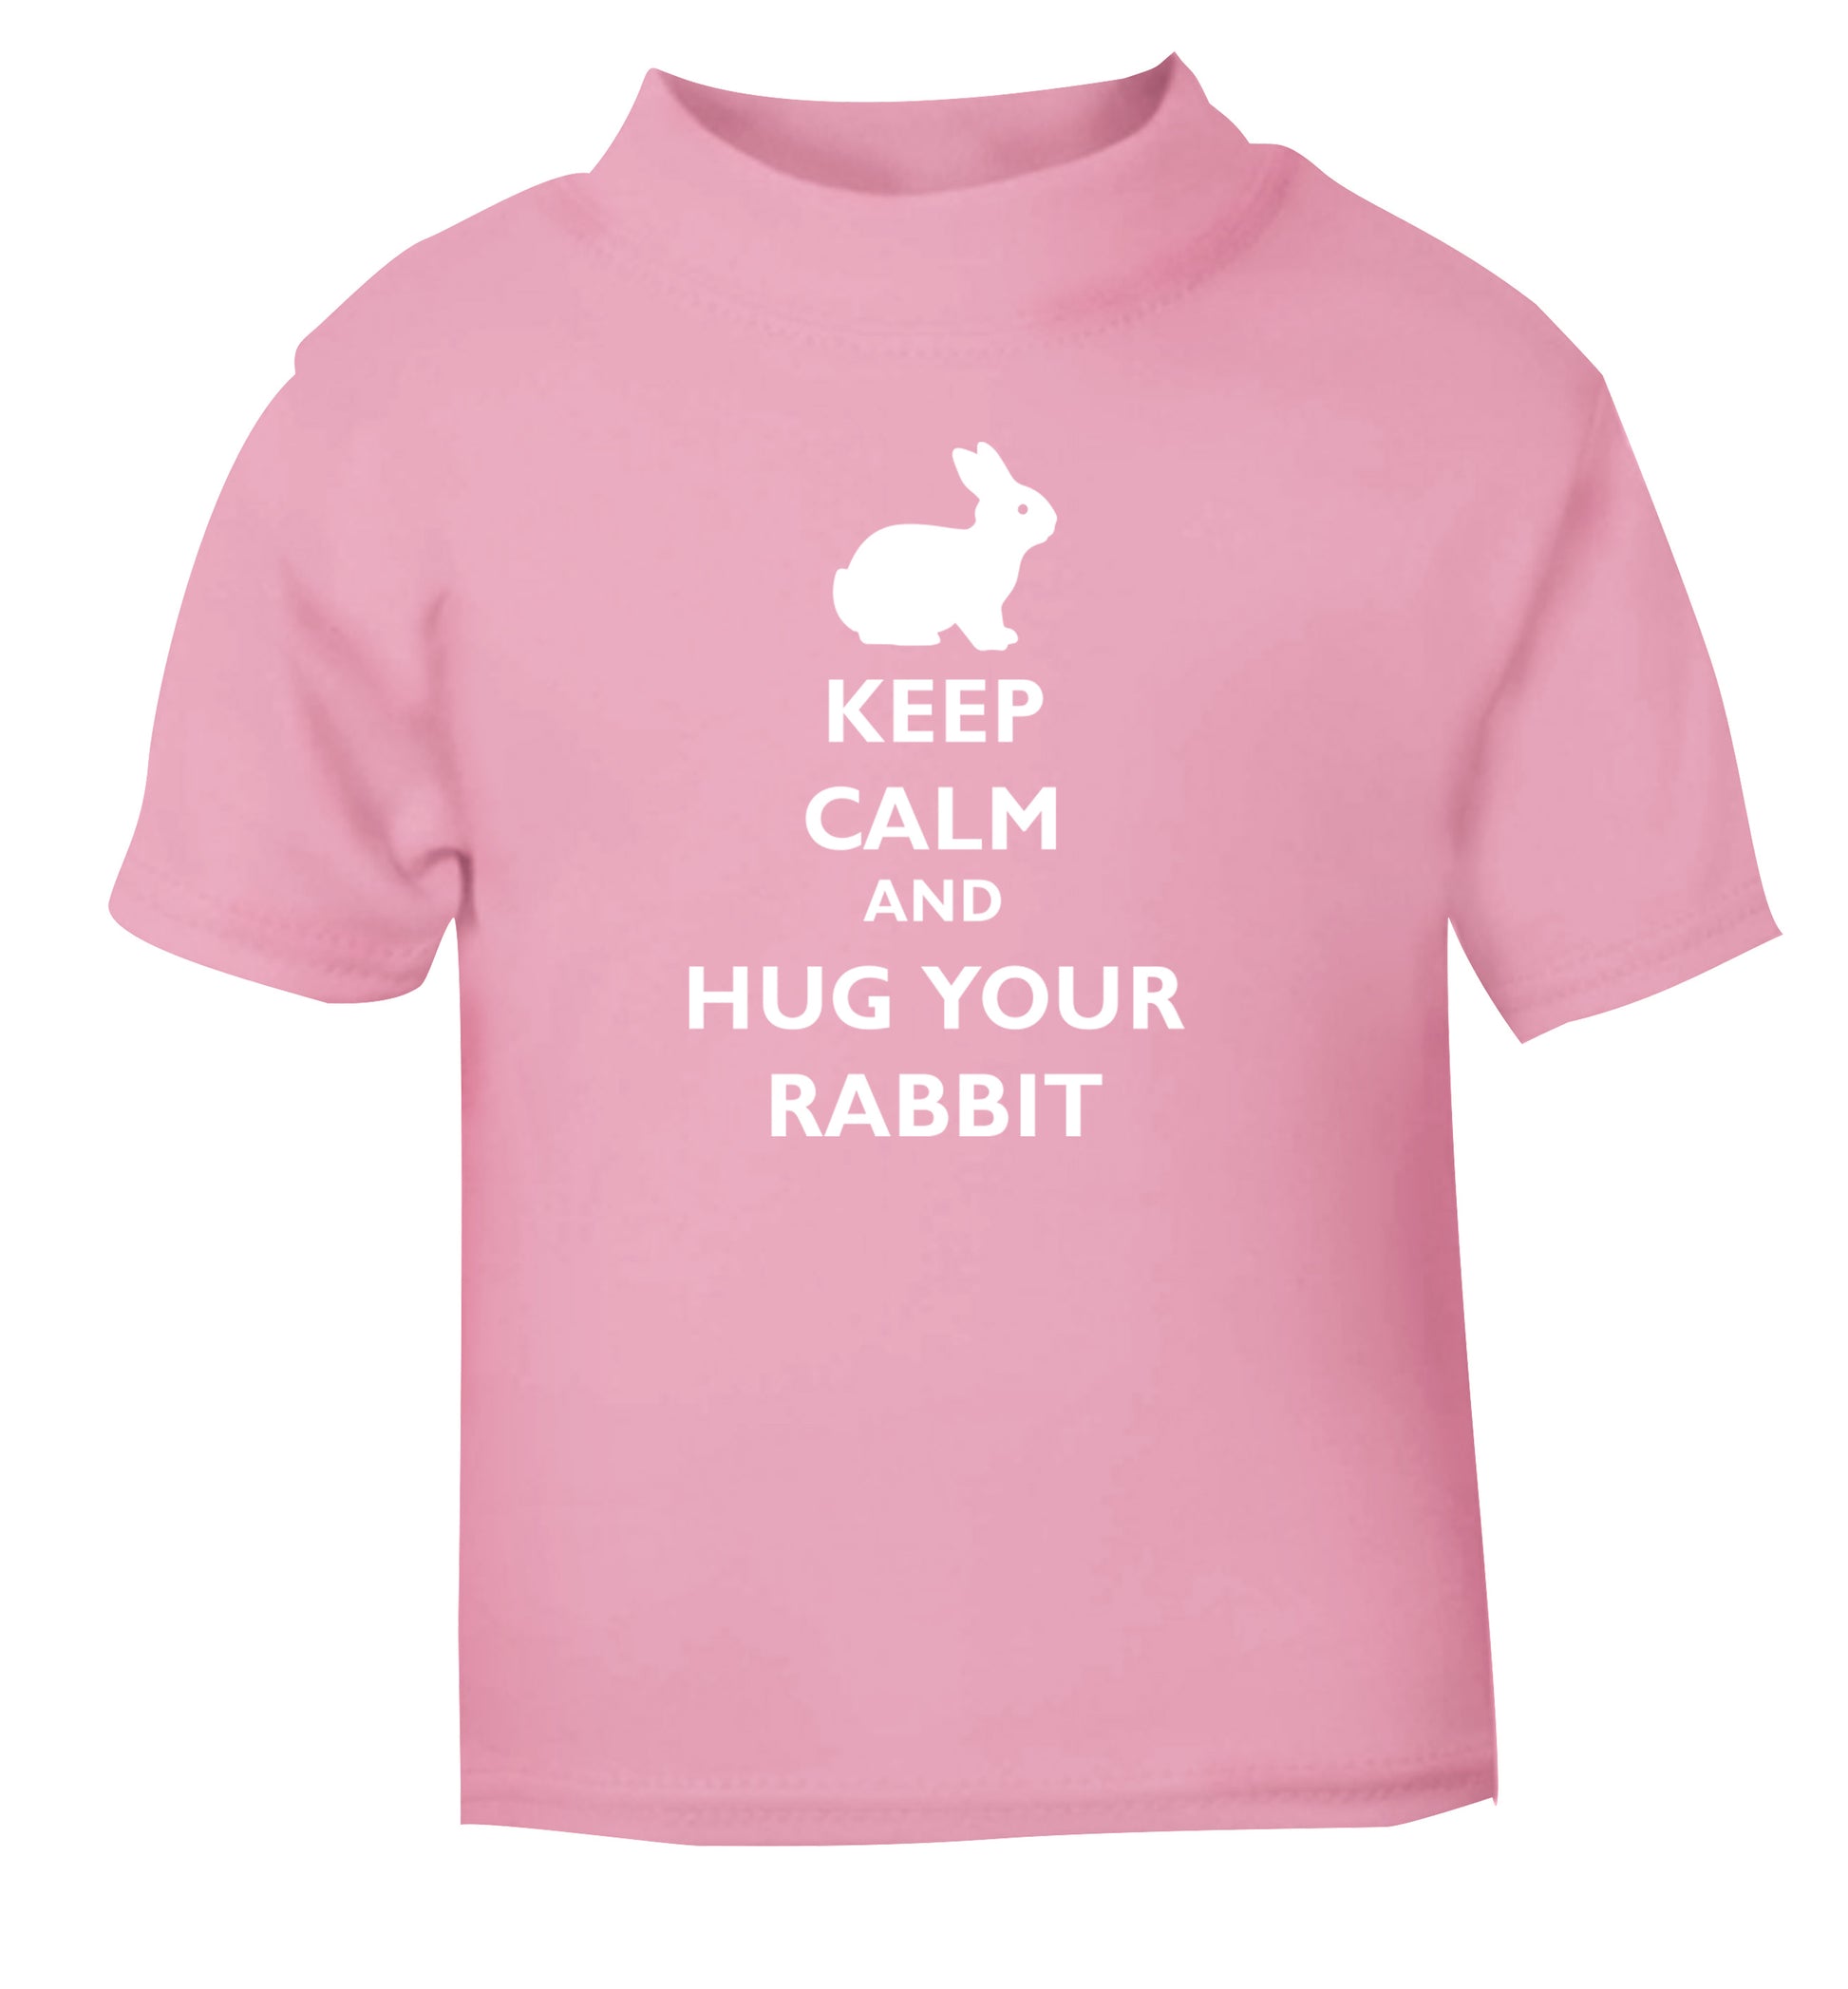 Keep calm and hug your rabbit light pink Baby Toddler Tshirt 2 Years